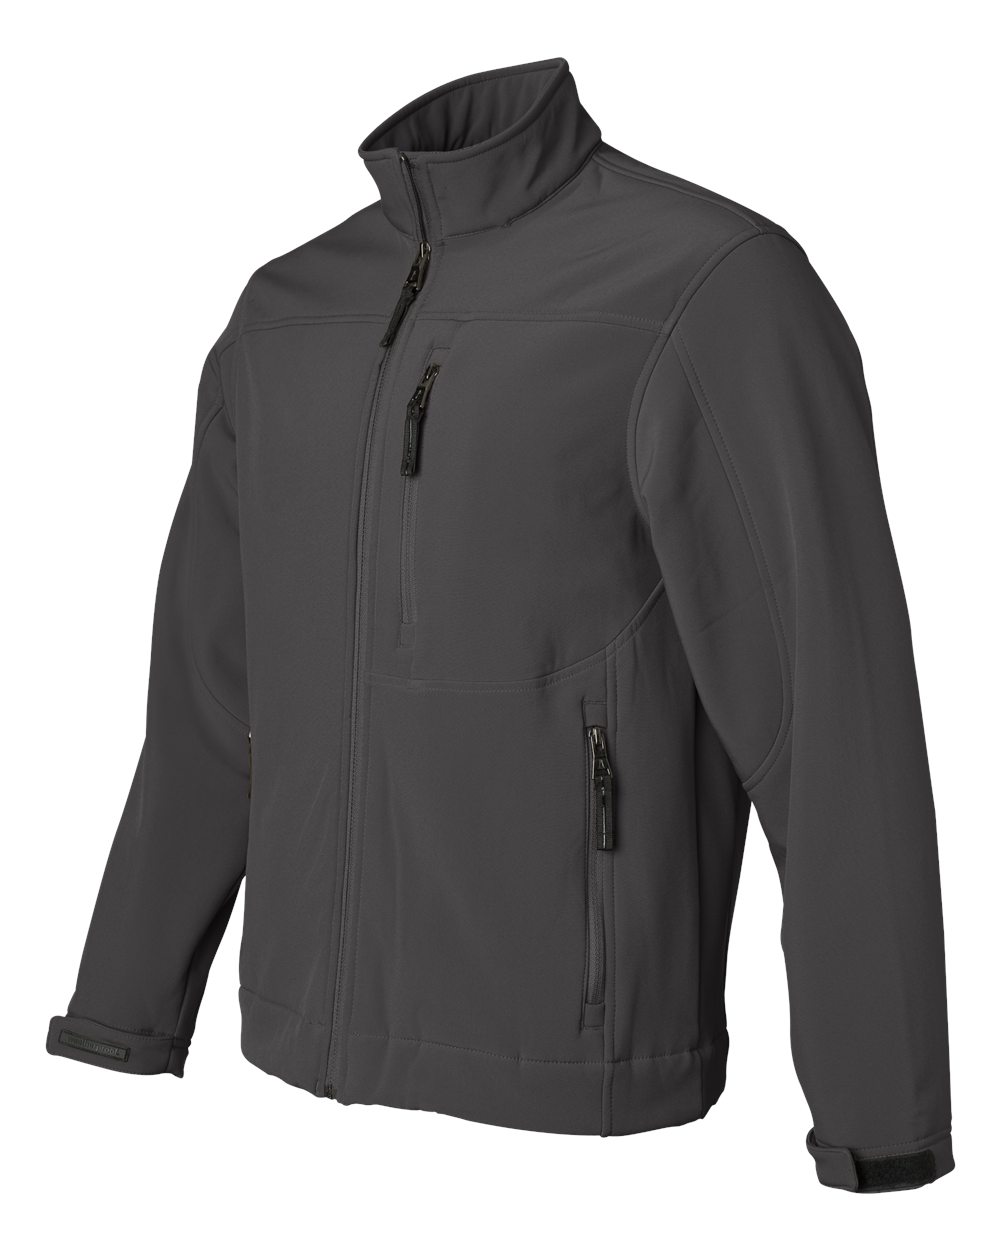 ApparelBus - Weatherproof 6500 Soft Shell Jacket